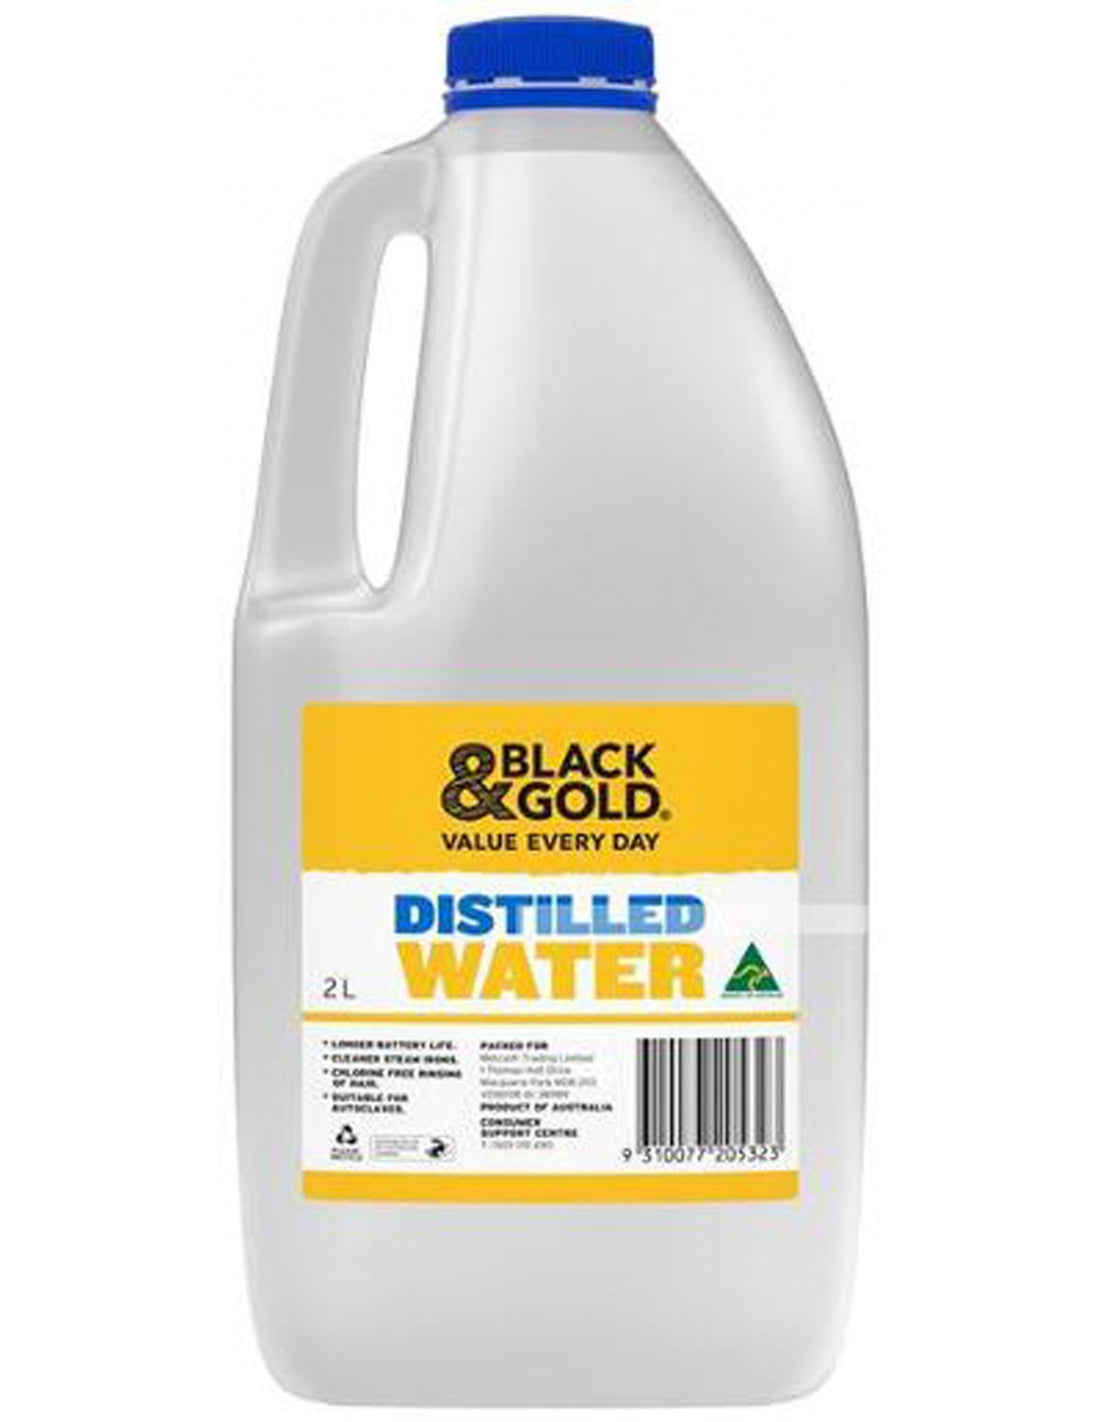 Black & Gold Distilled Water 2l